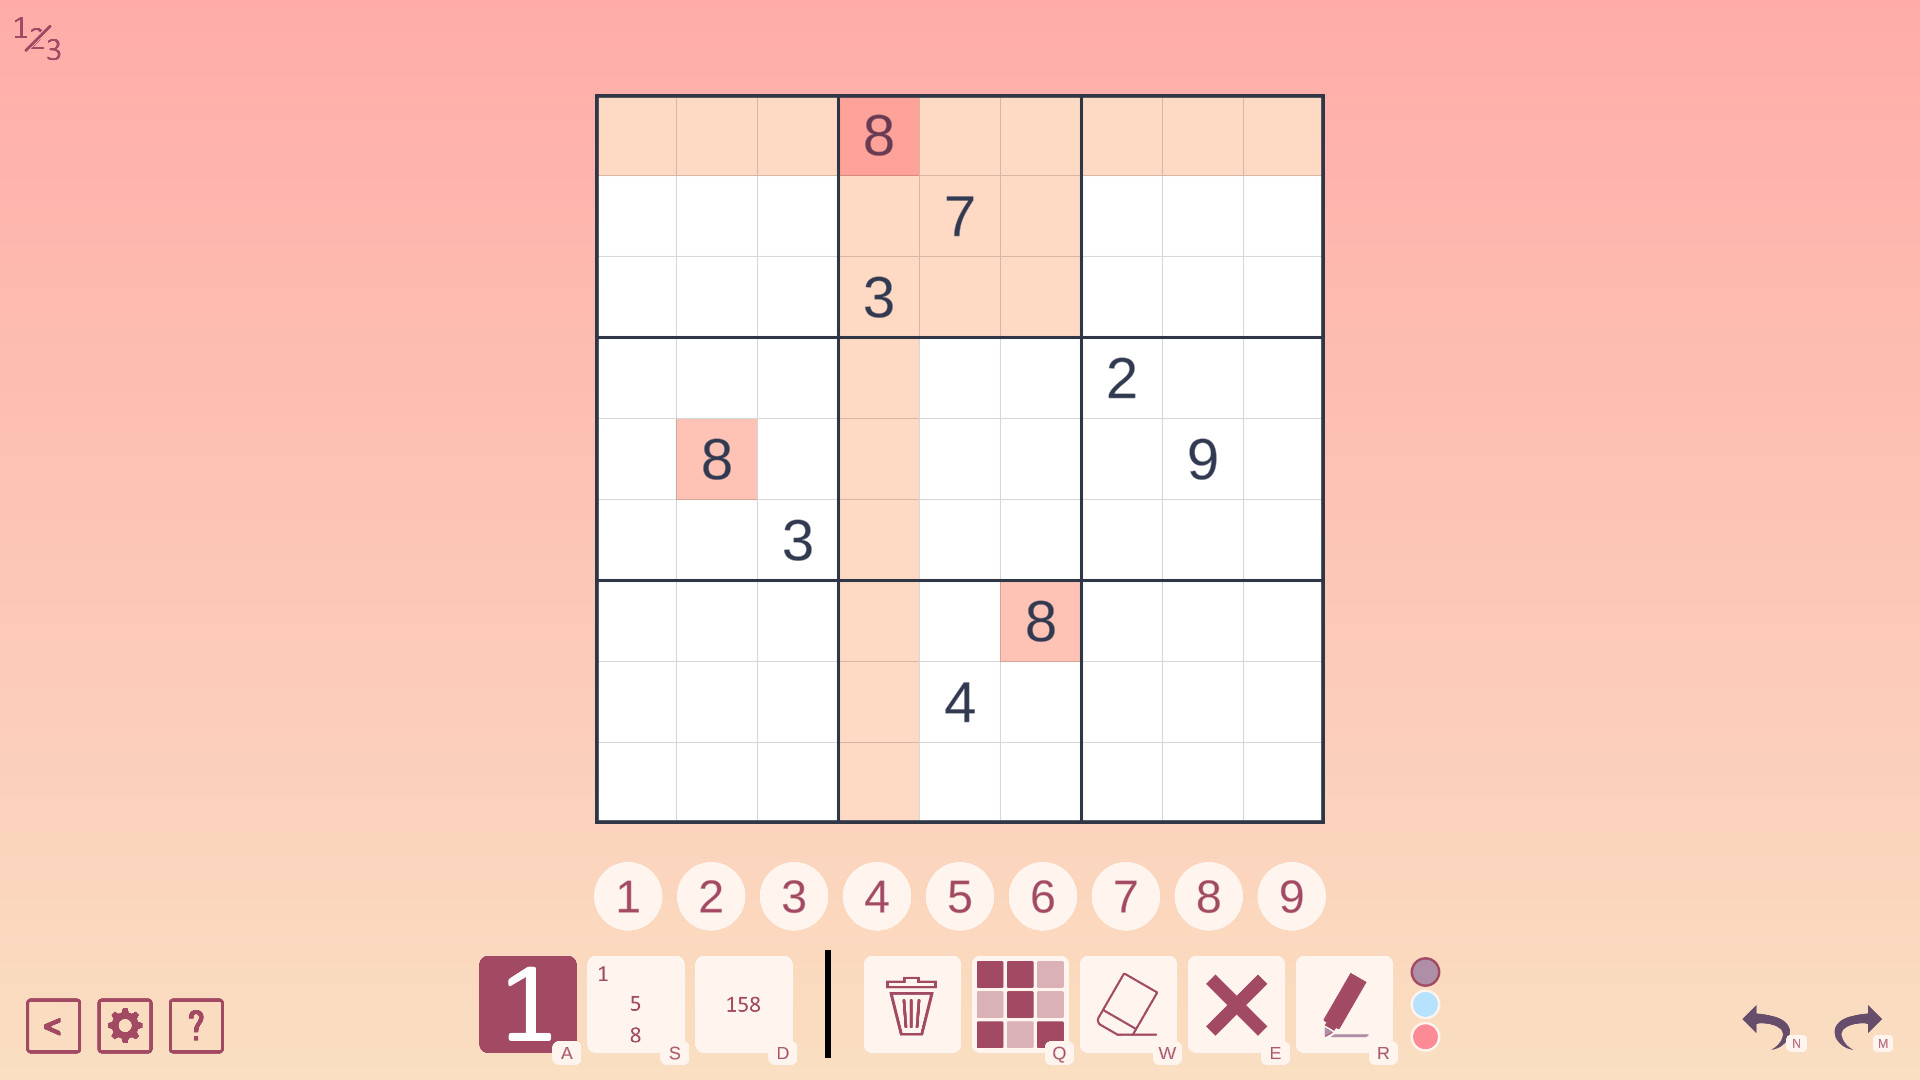 Miracle Sudoku Free Download